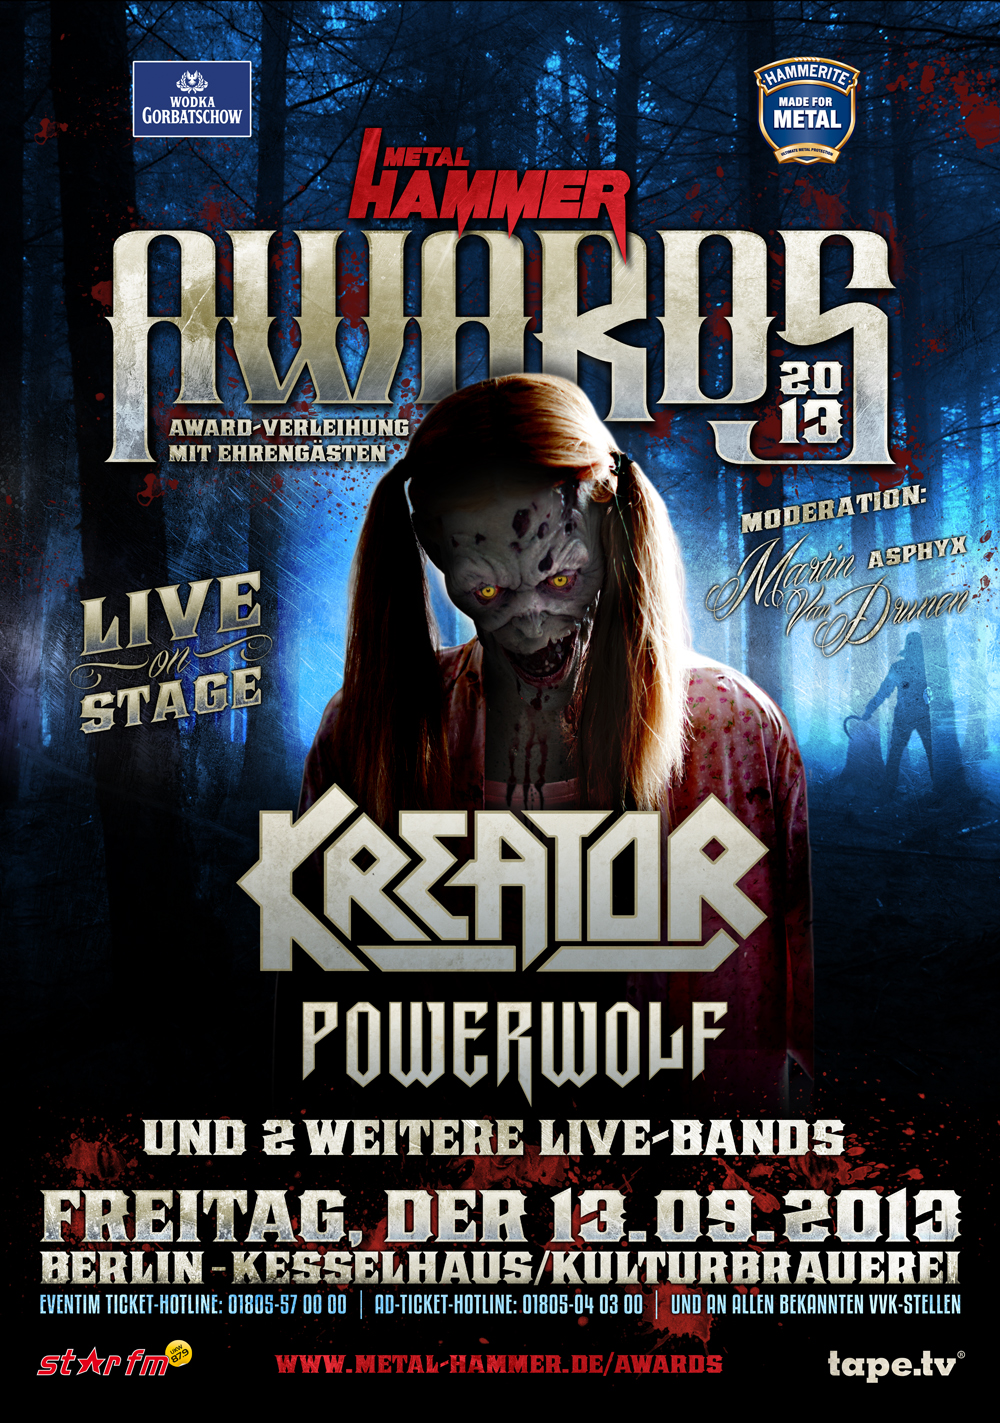 METAL HAMMER AWARDS 2013
www.metal-hammer.de/awards